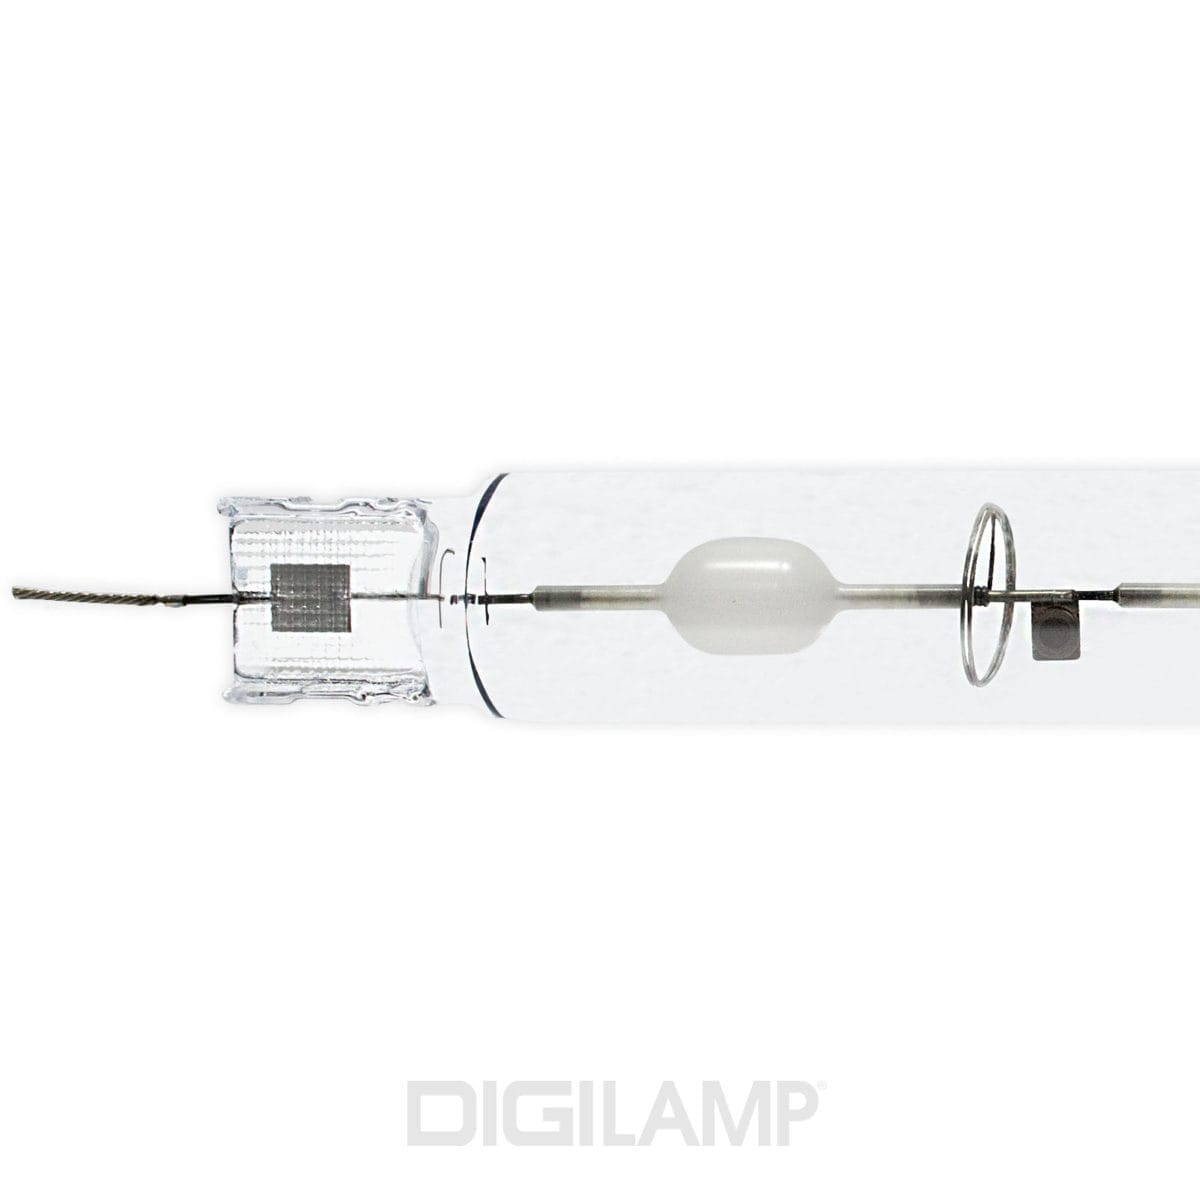 DigiLamp 945w CMH Lamp Close Up